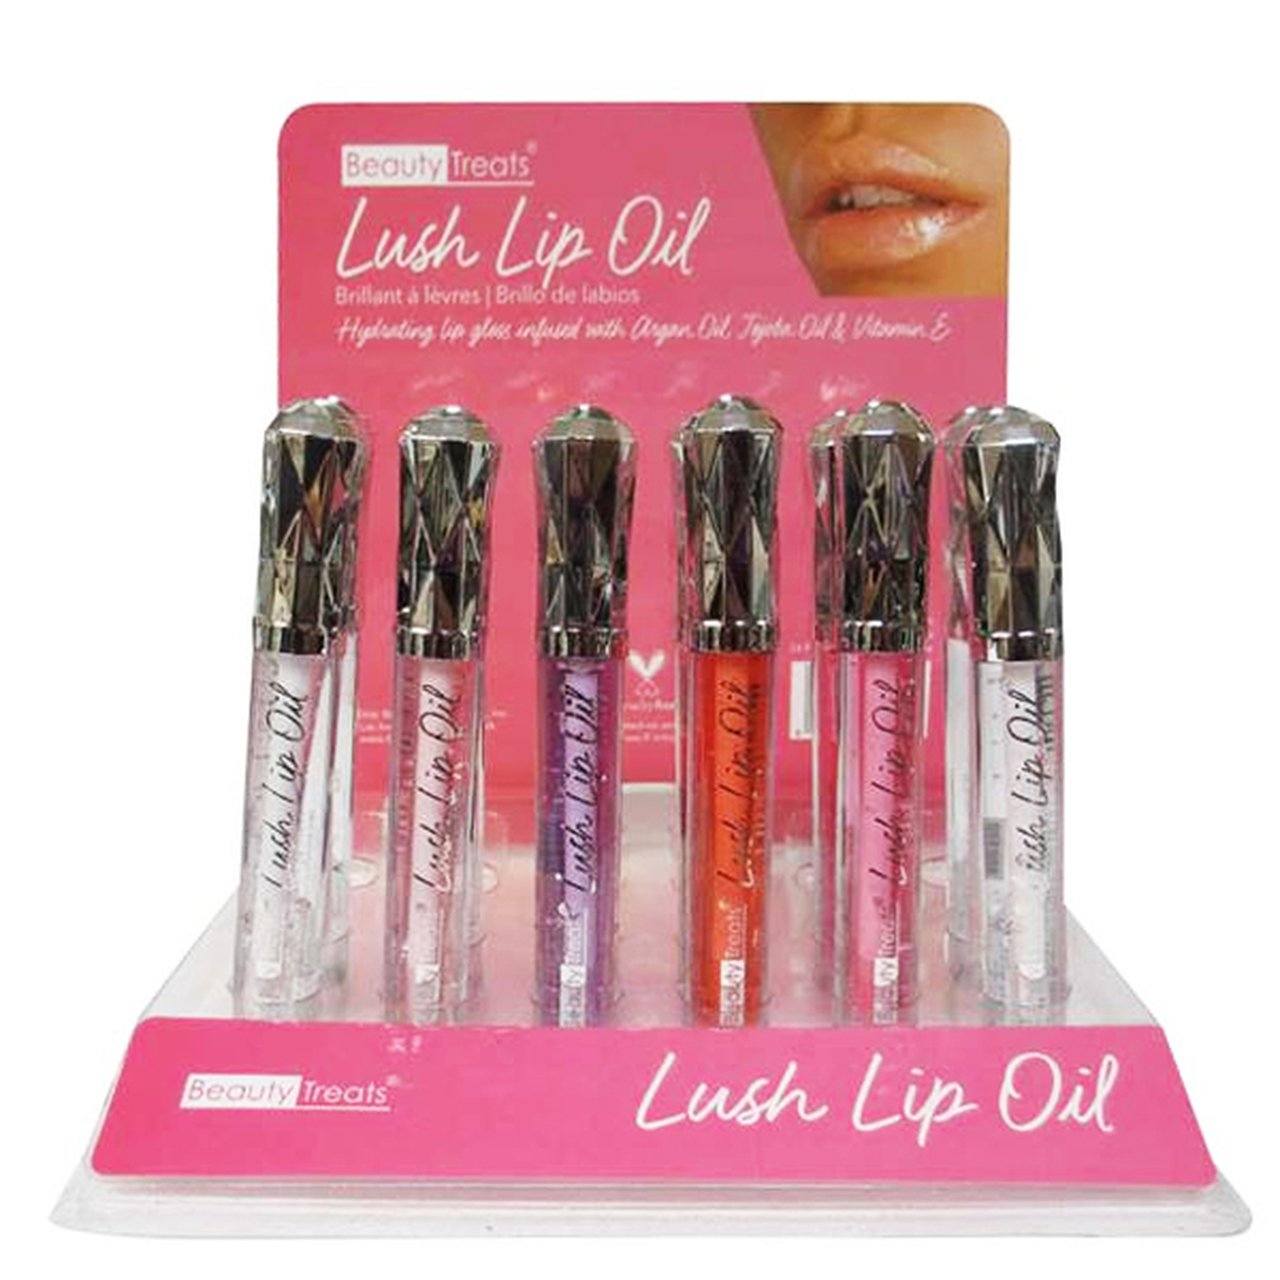 Beauty Treats Lush Lip Oil #521 (24PC)